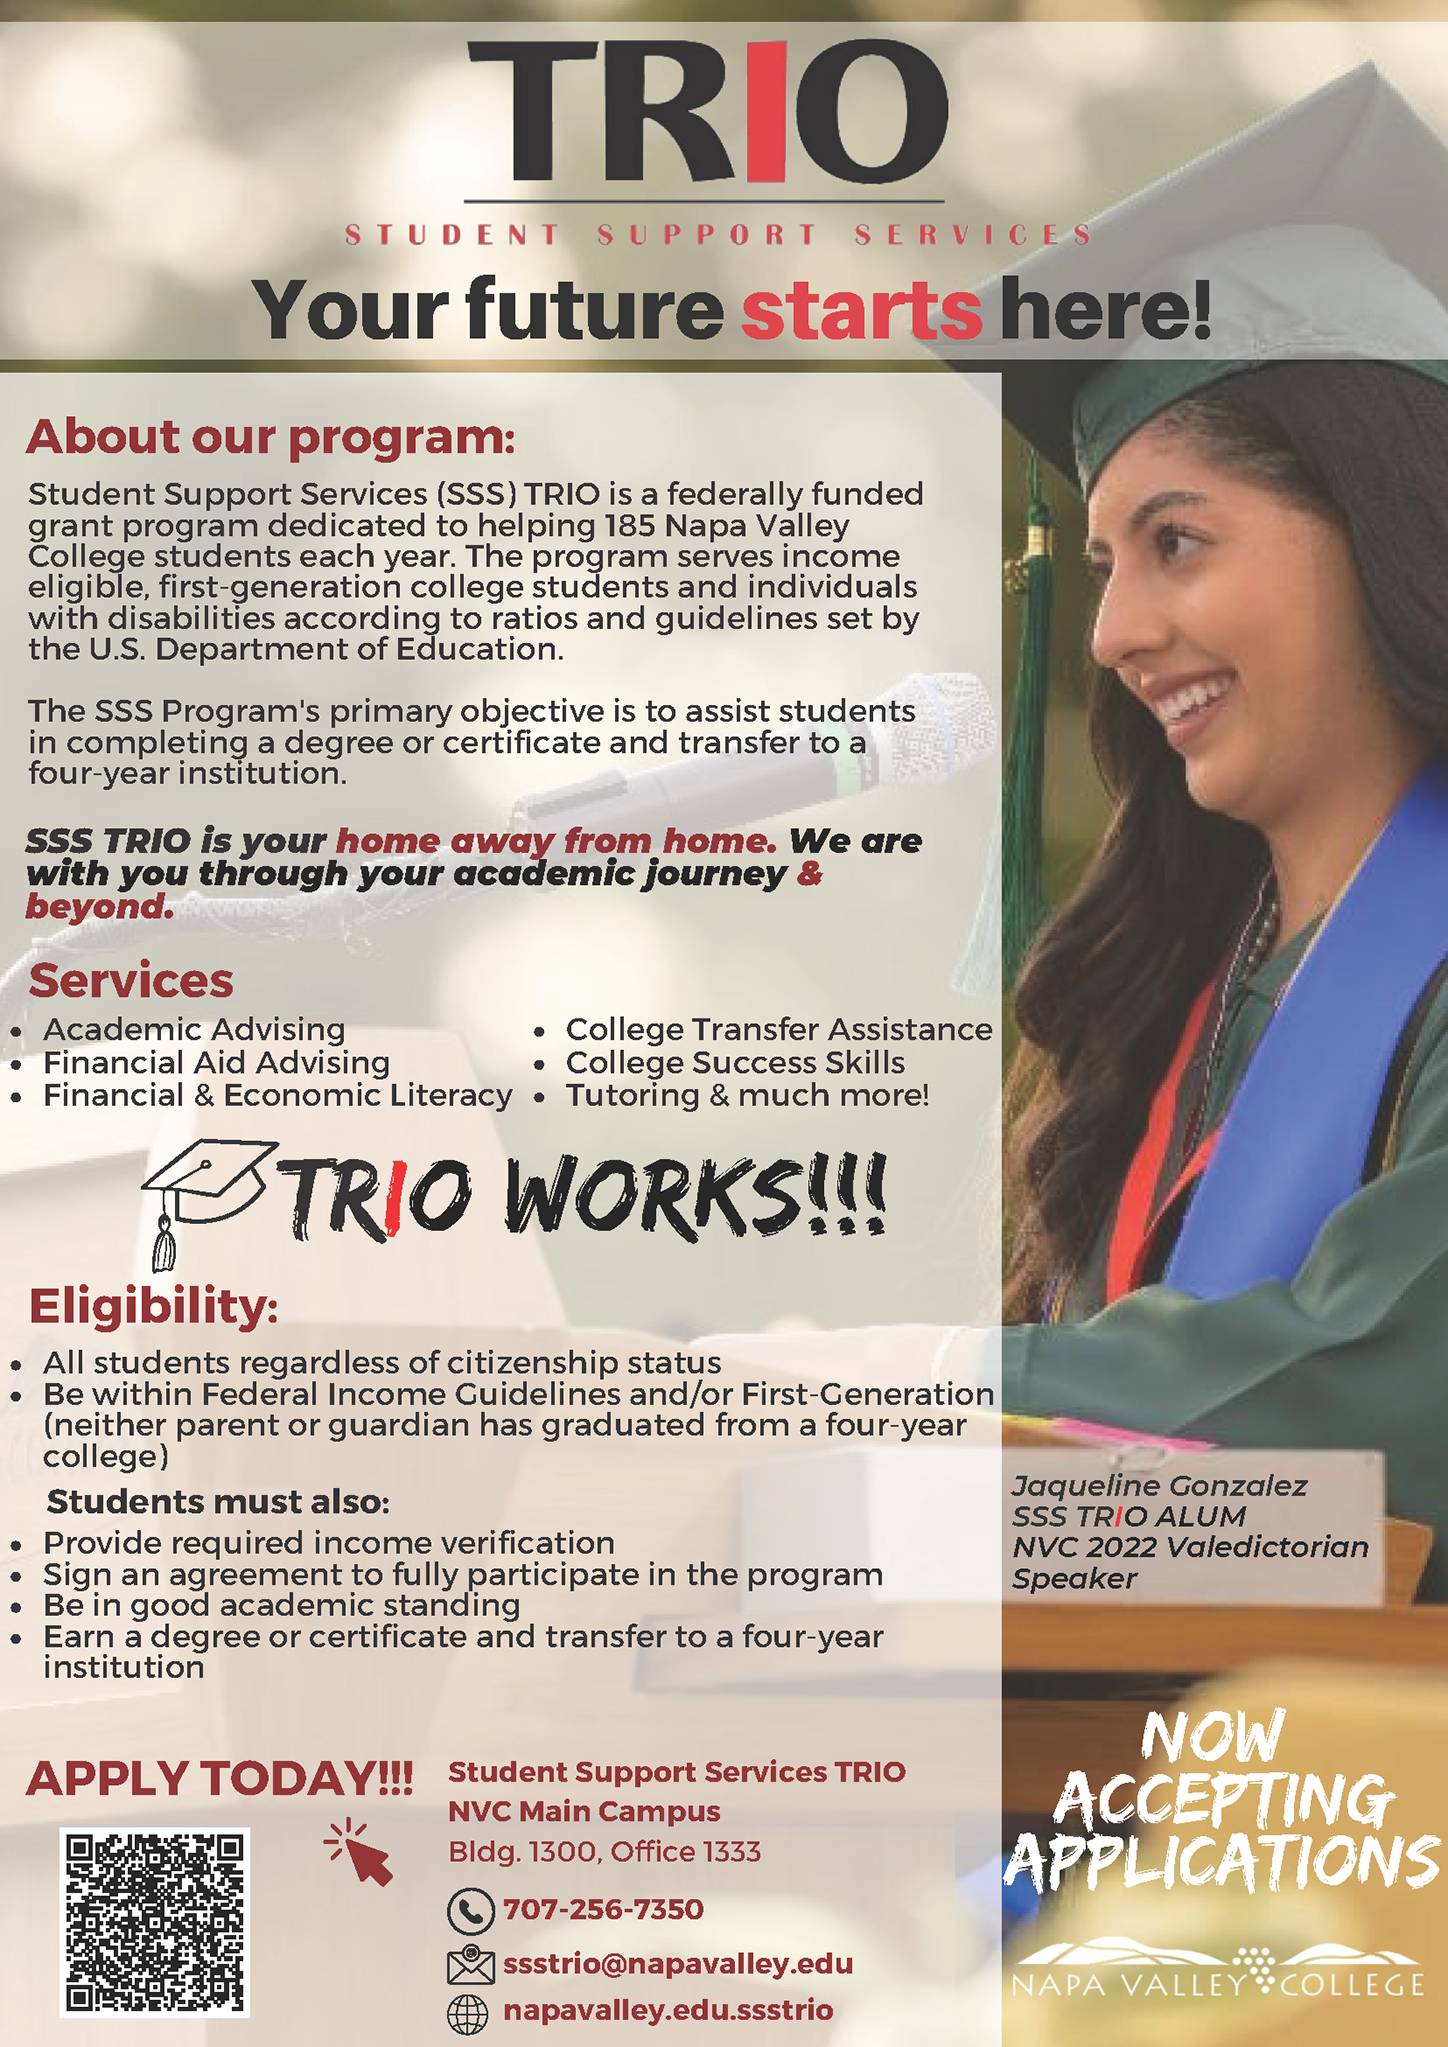 Flyer advertising SSS TRIO Programs